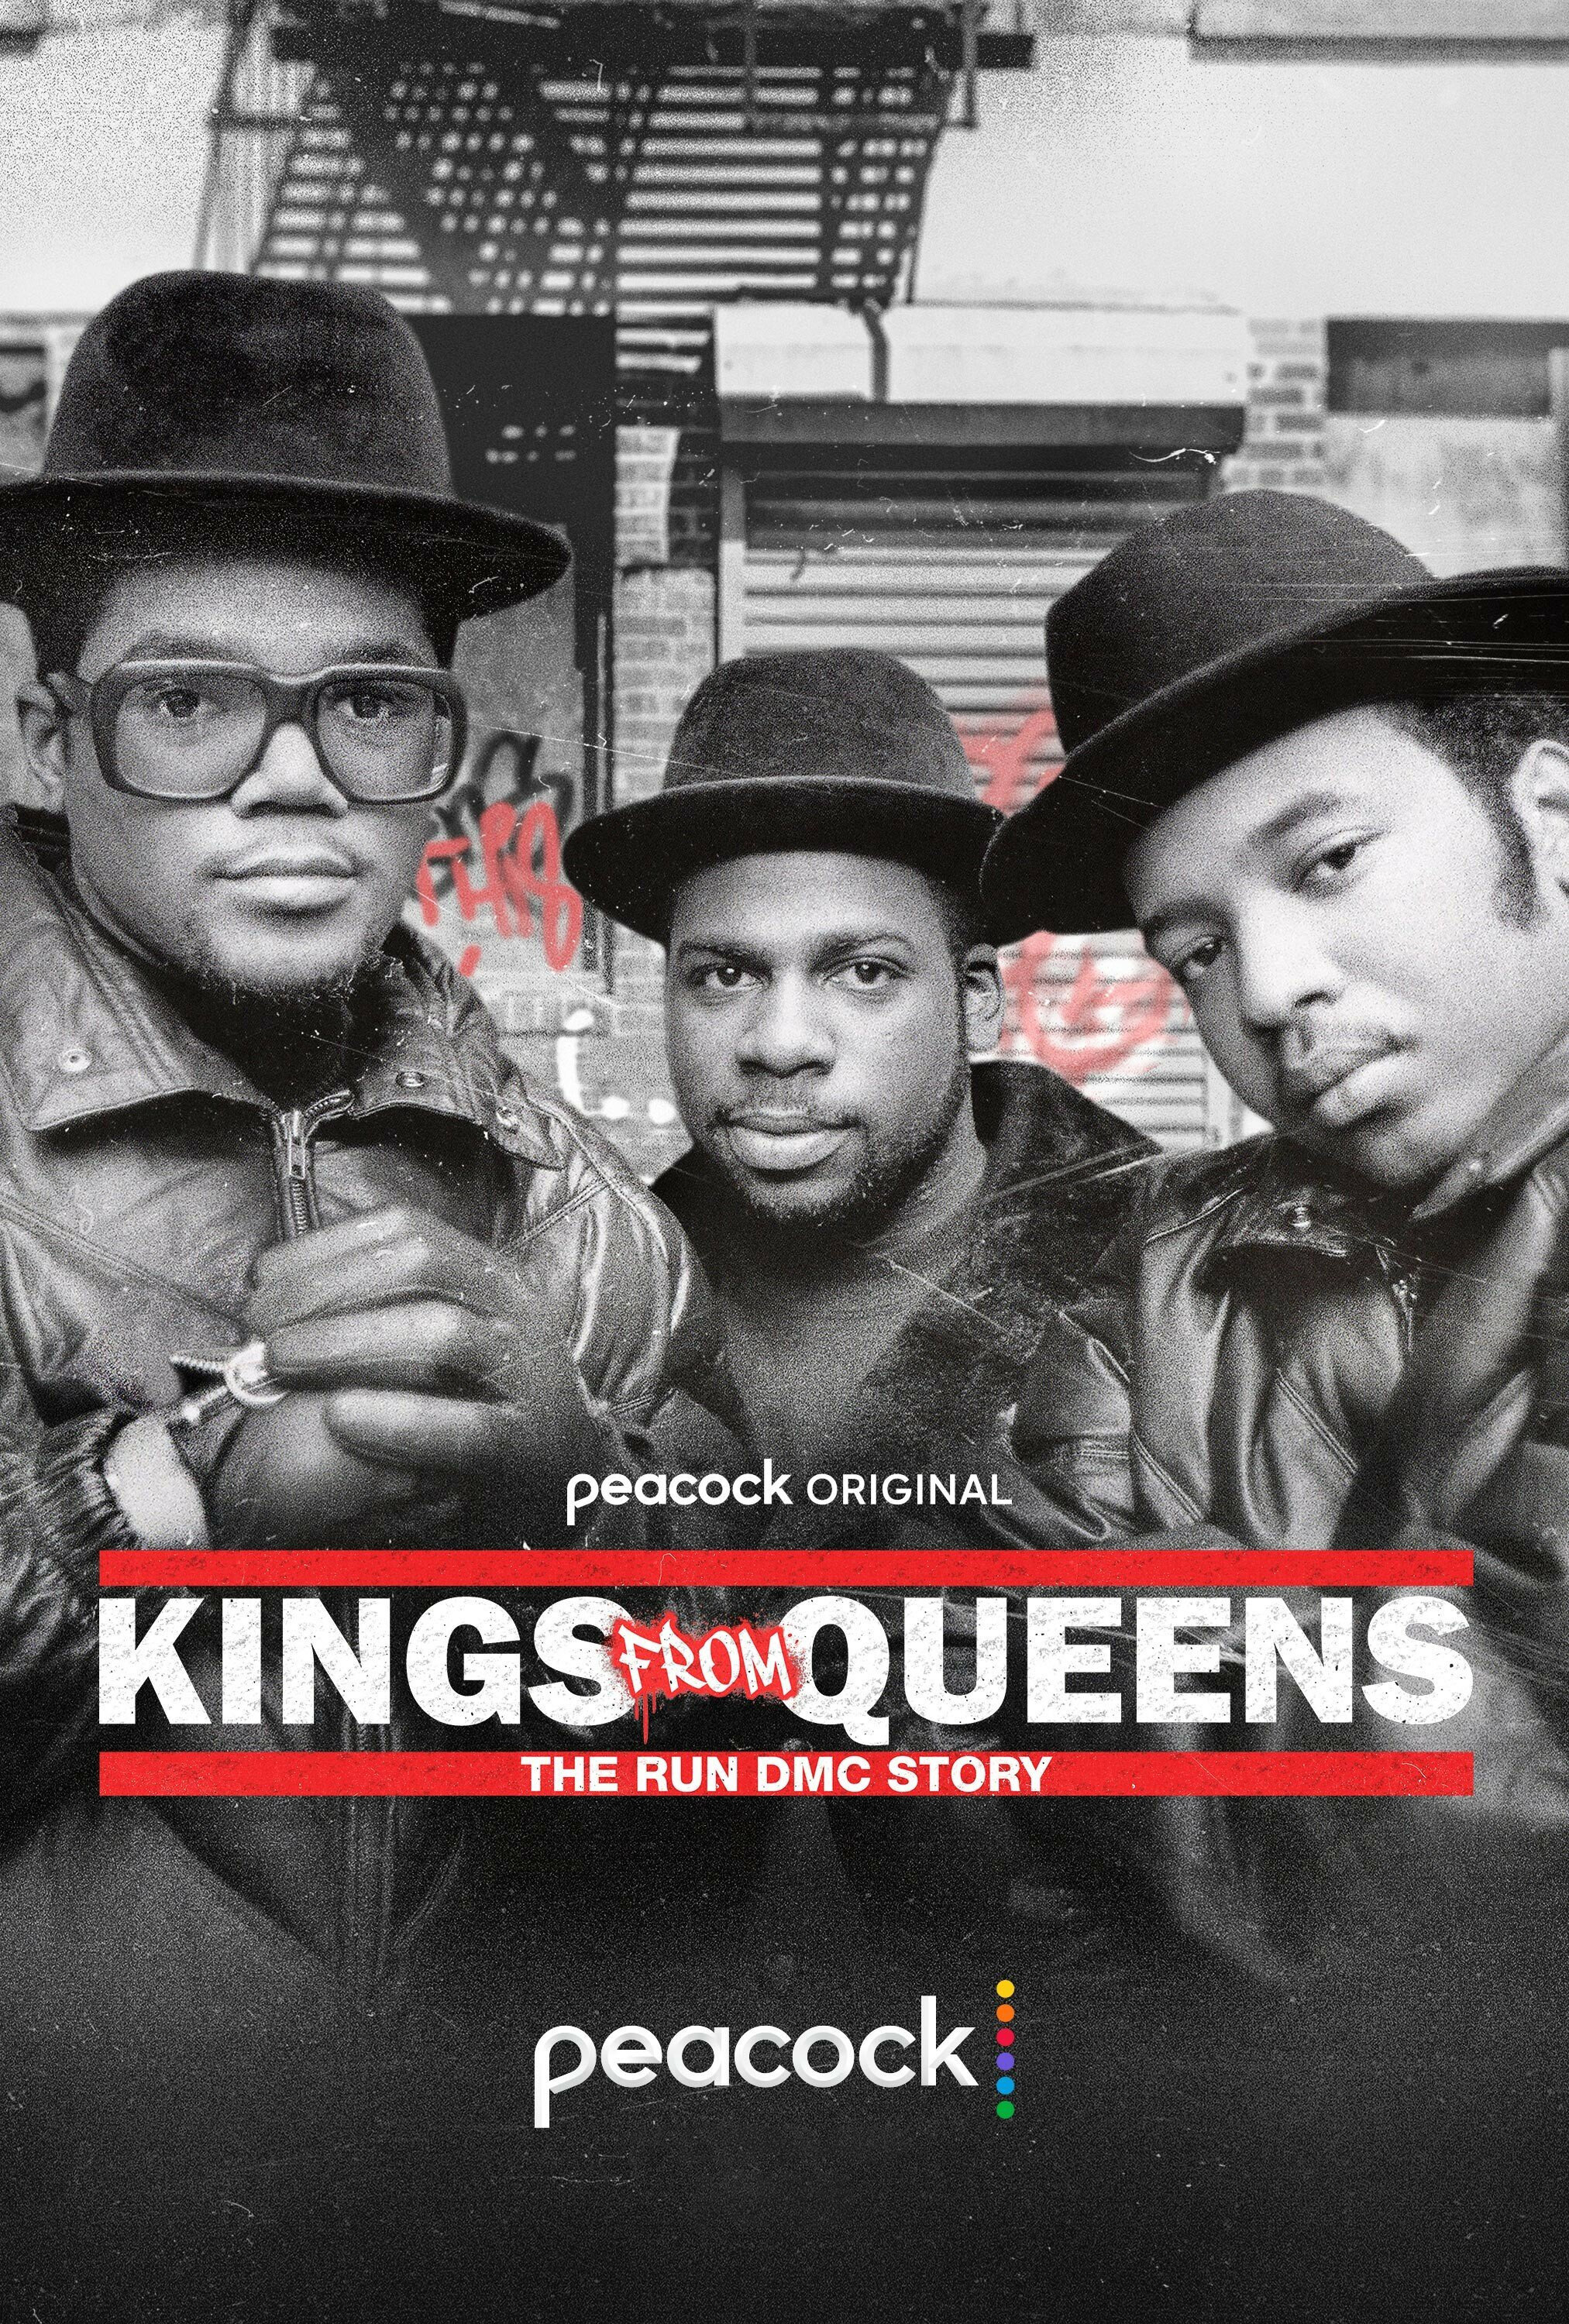 Kings From Queens: The RUN DMC Story ne zaman